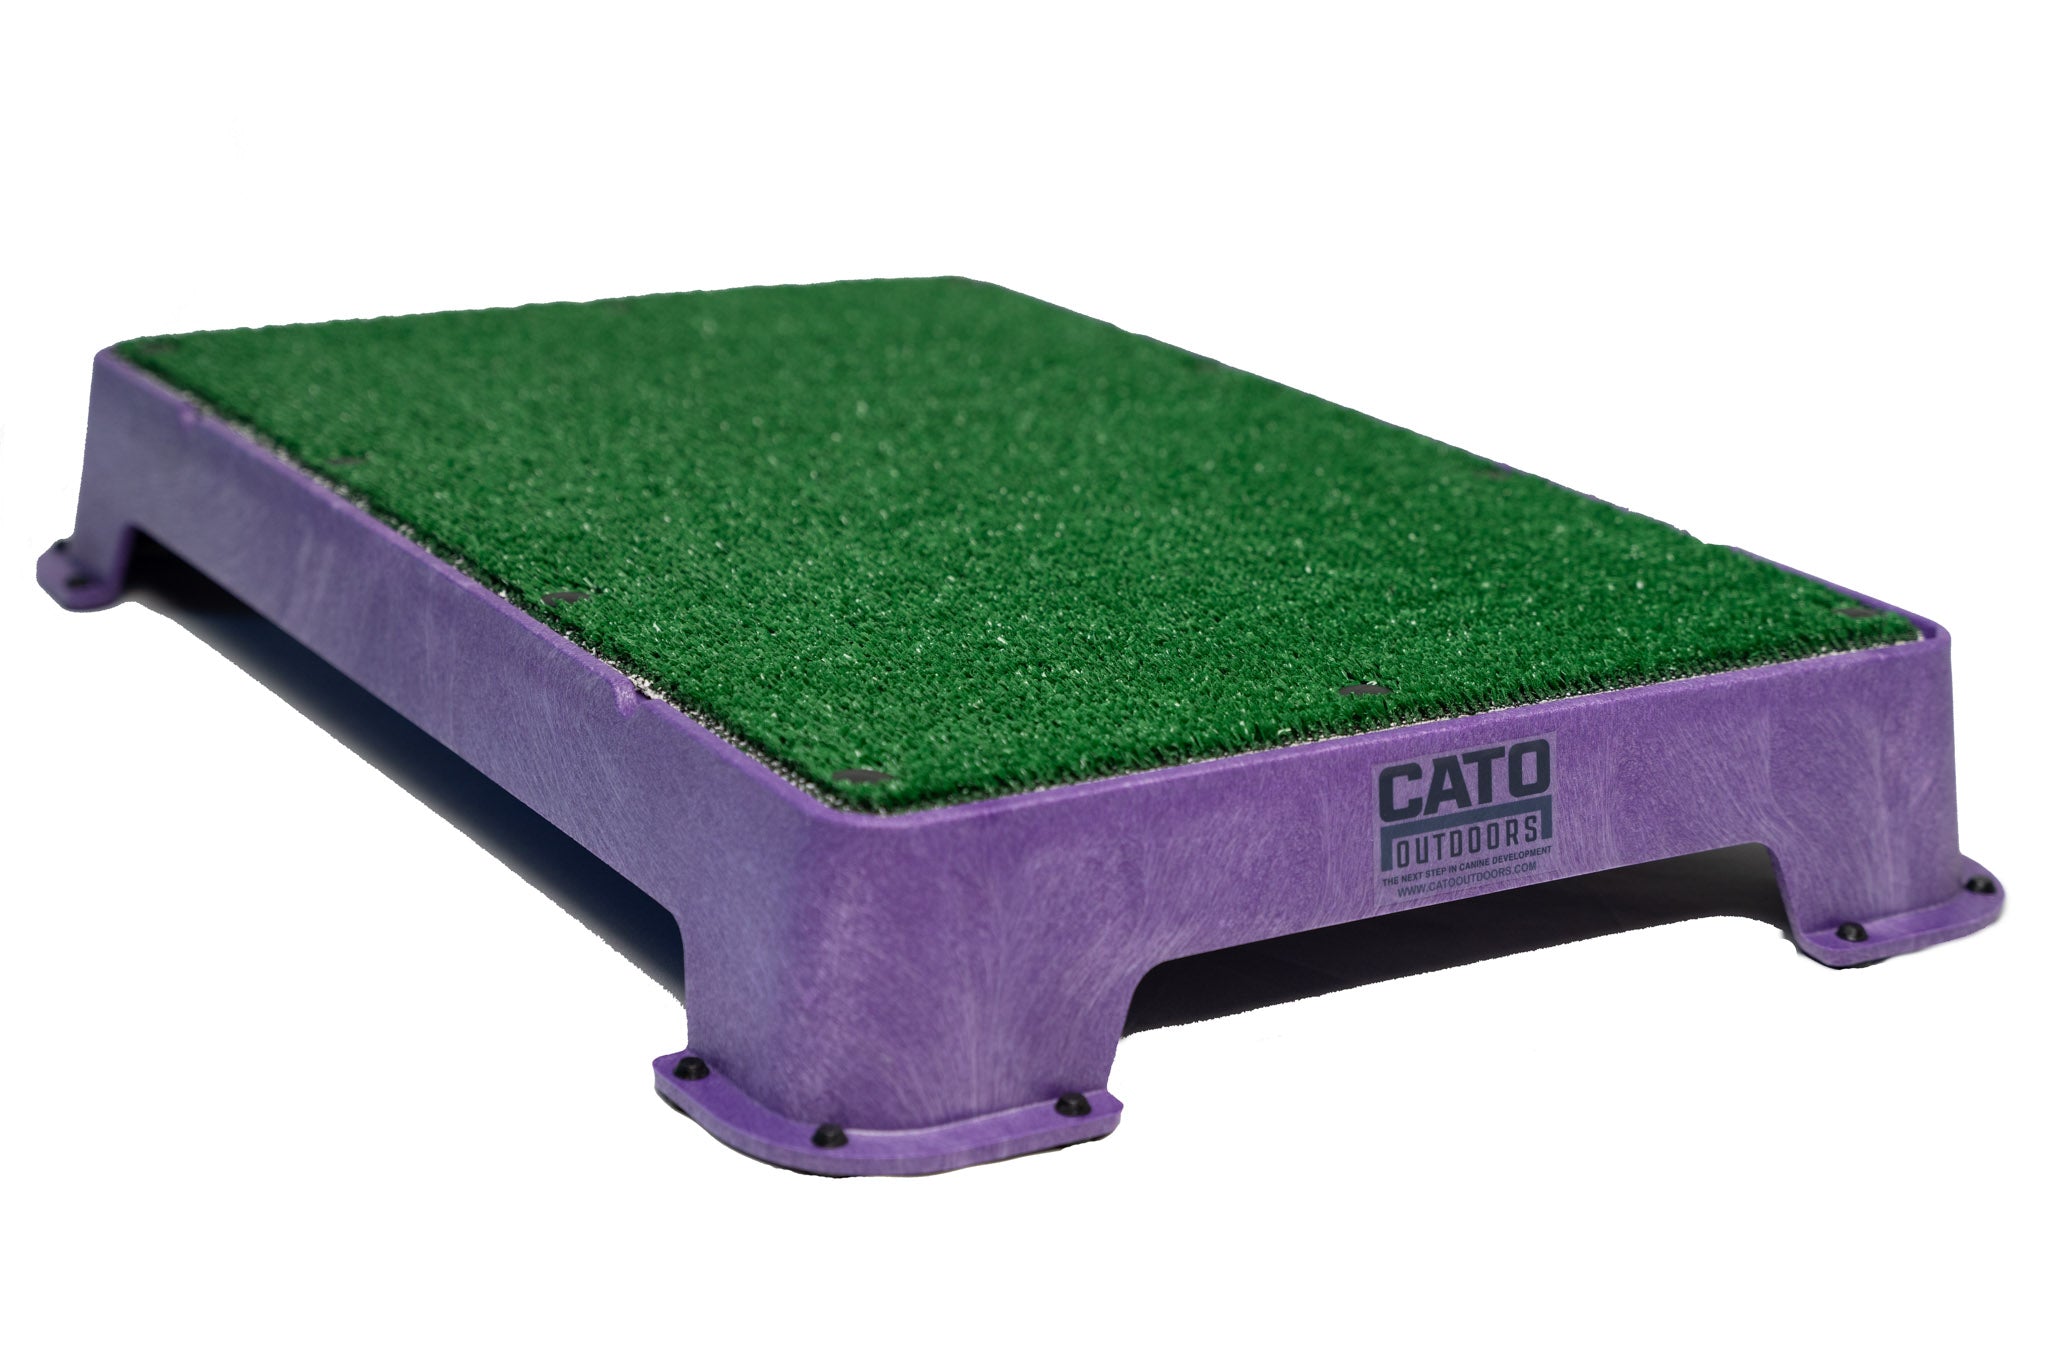 Cato Board - Dog Training Platform (Pink, Rubber Surface)